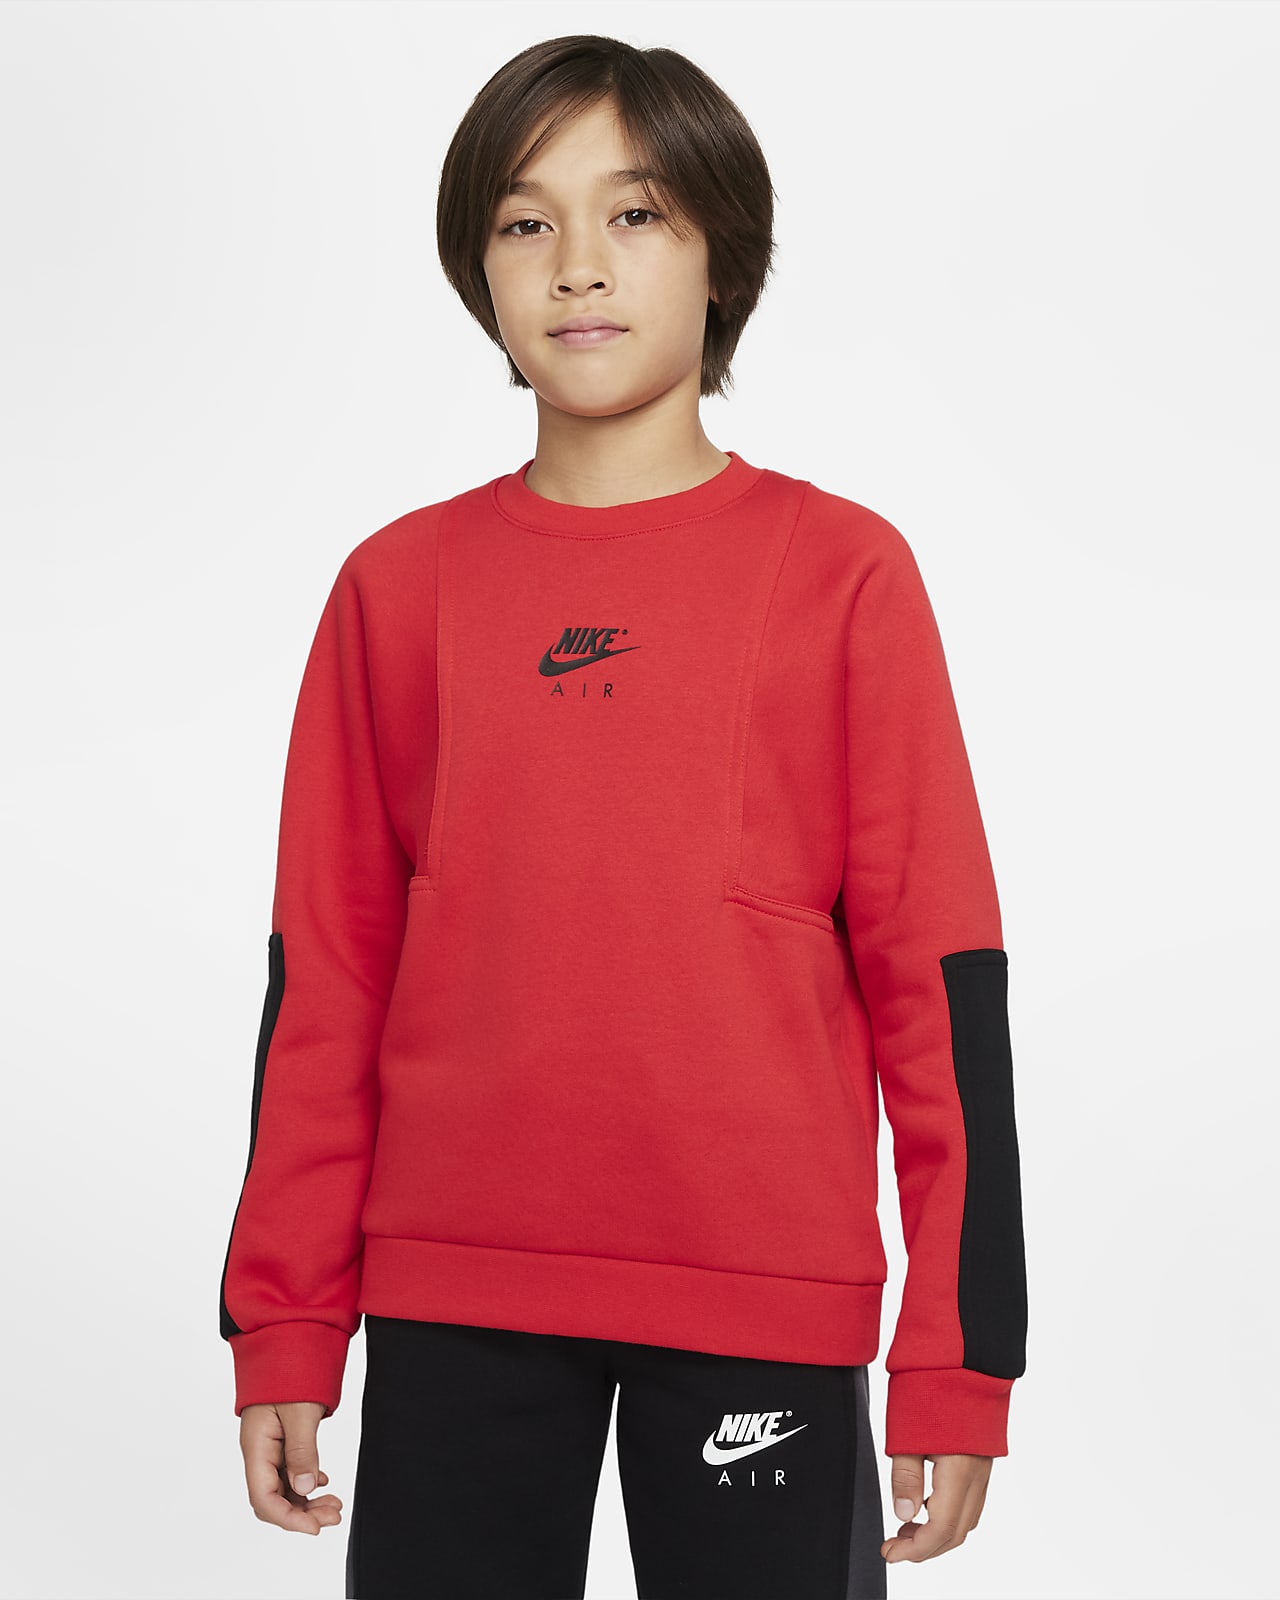 Nike Air Big Kids' (Boys') Sweatshirt